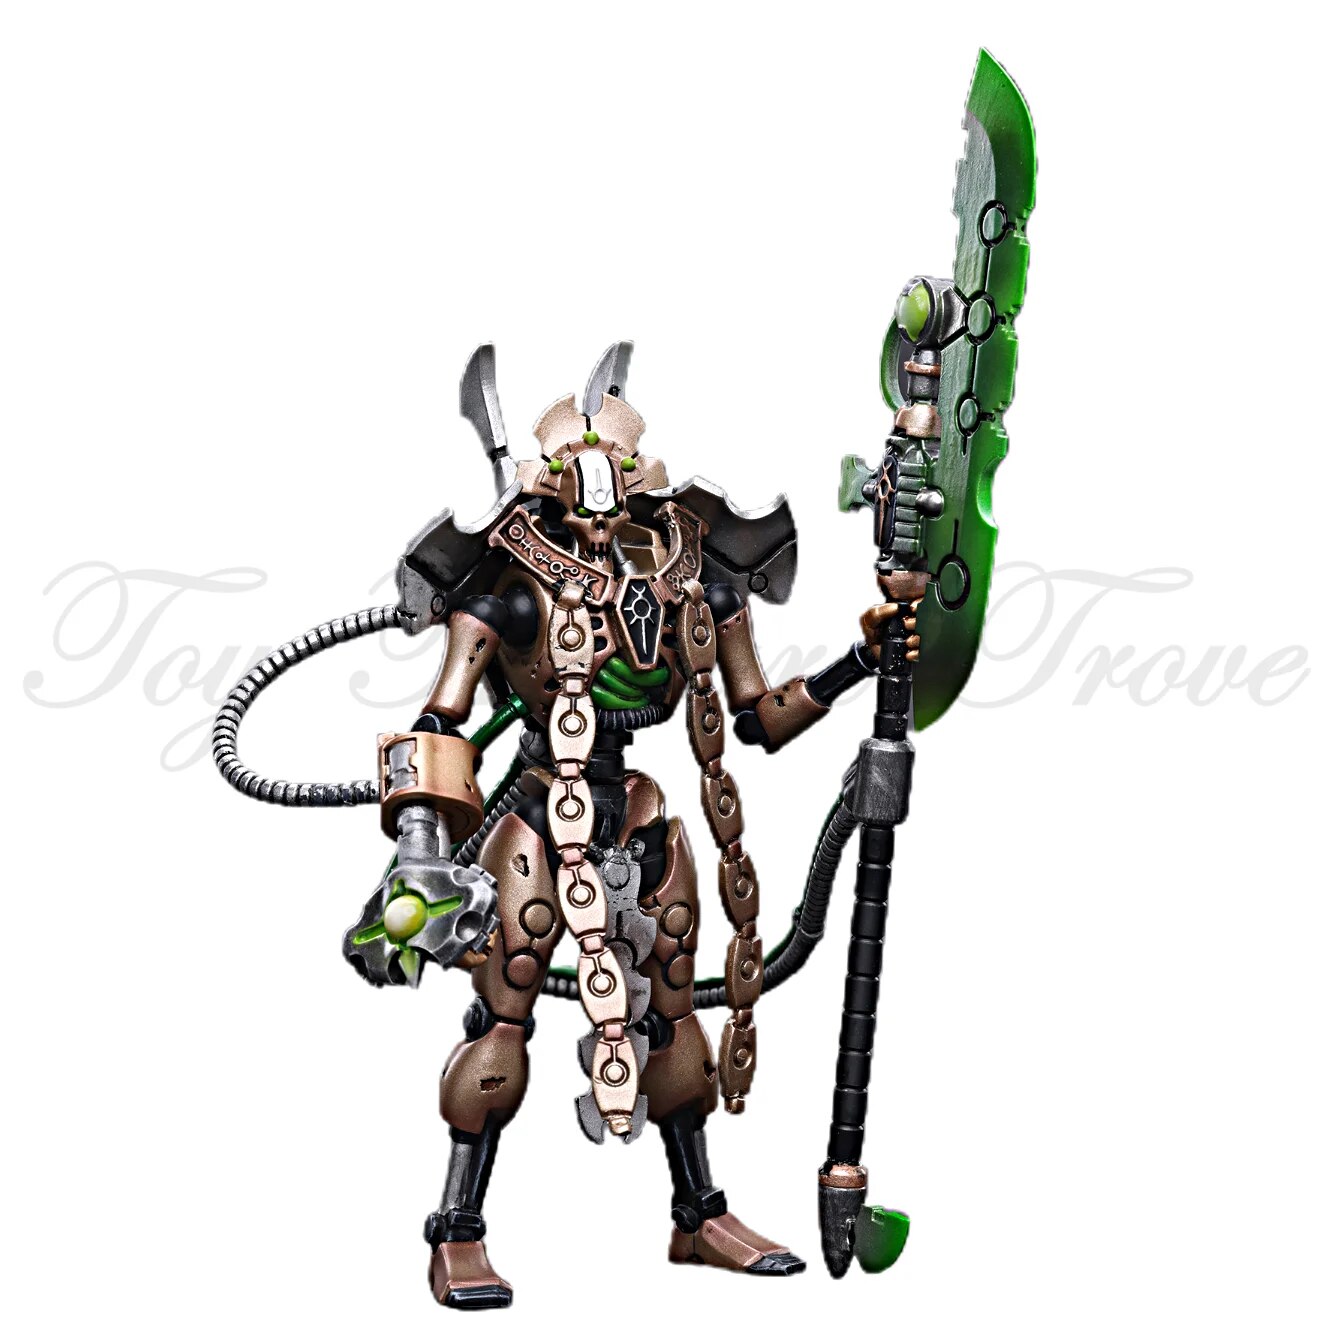 JOYTOY Warhammer 40K 1/18 Action Figures Necrons, Szarekhan, Sautekh Dynasty & Deathmark Figurine Variants